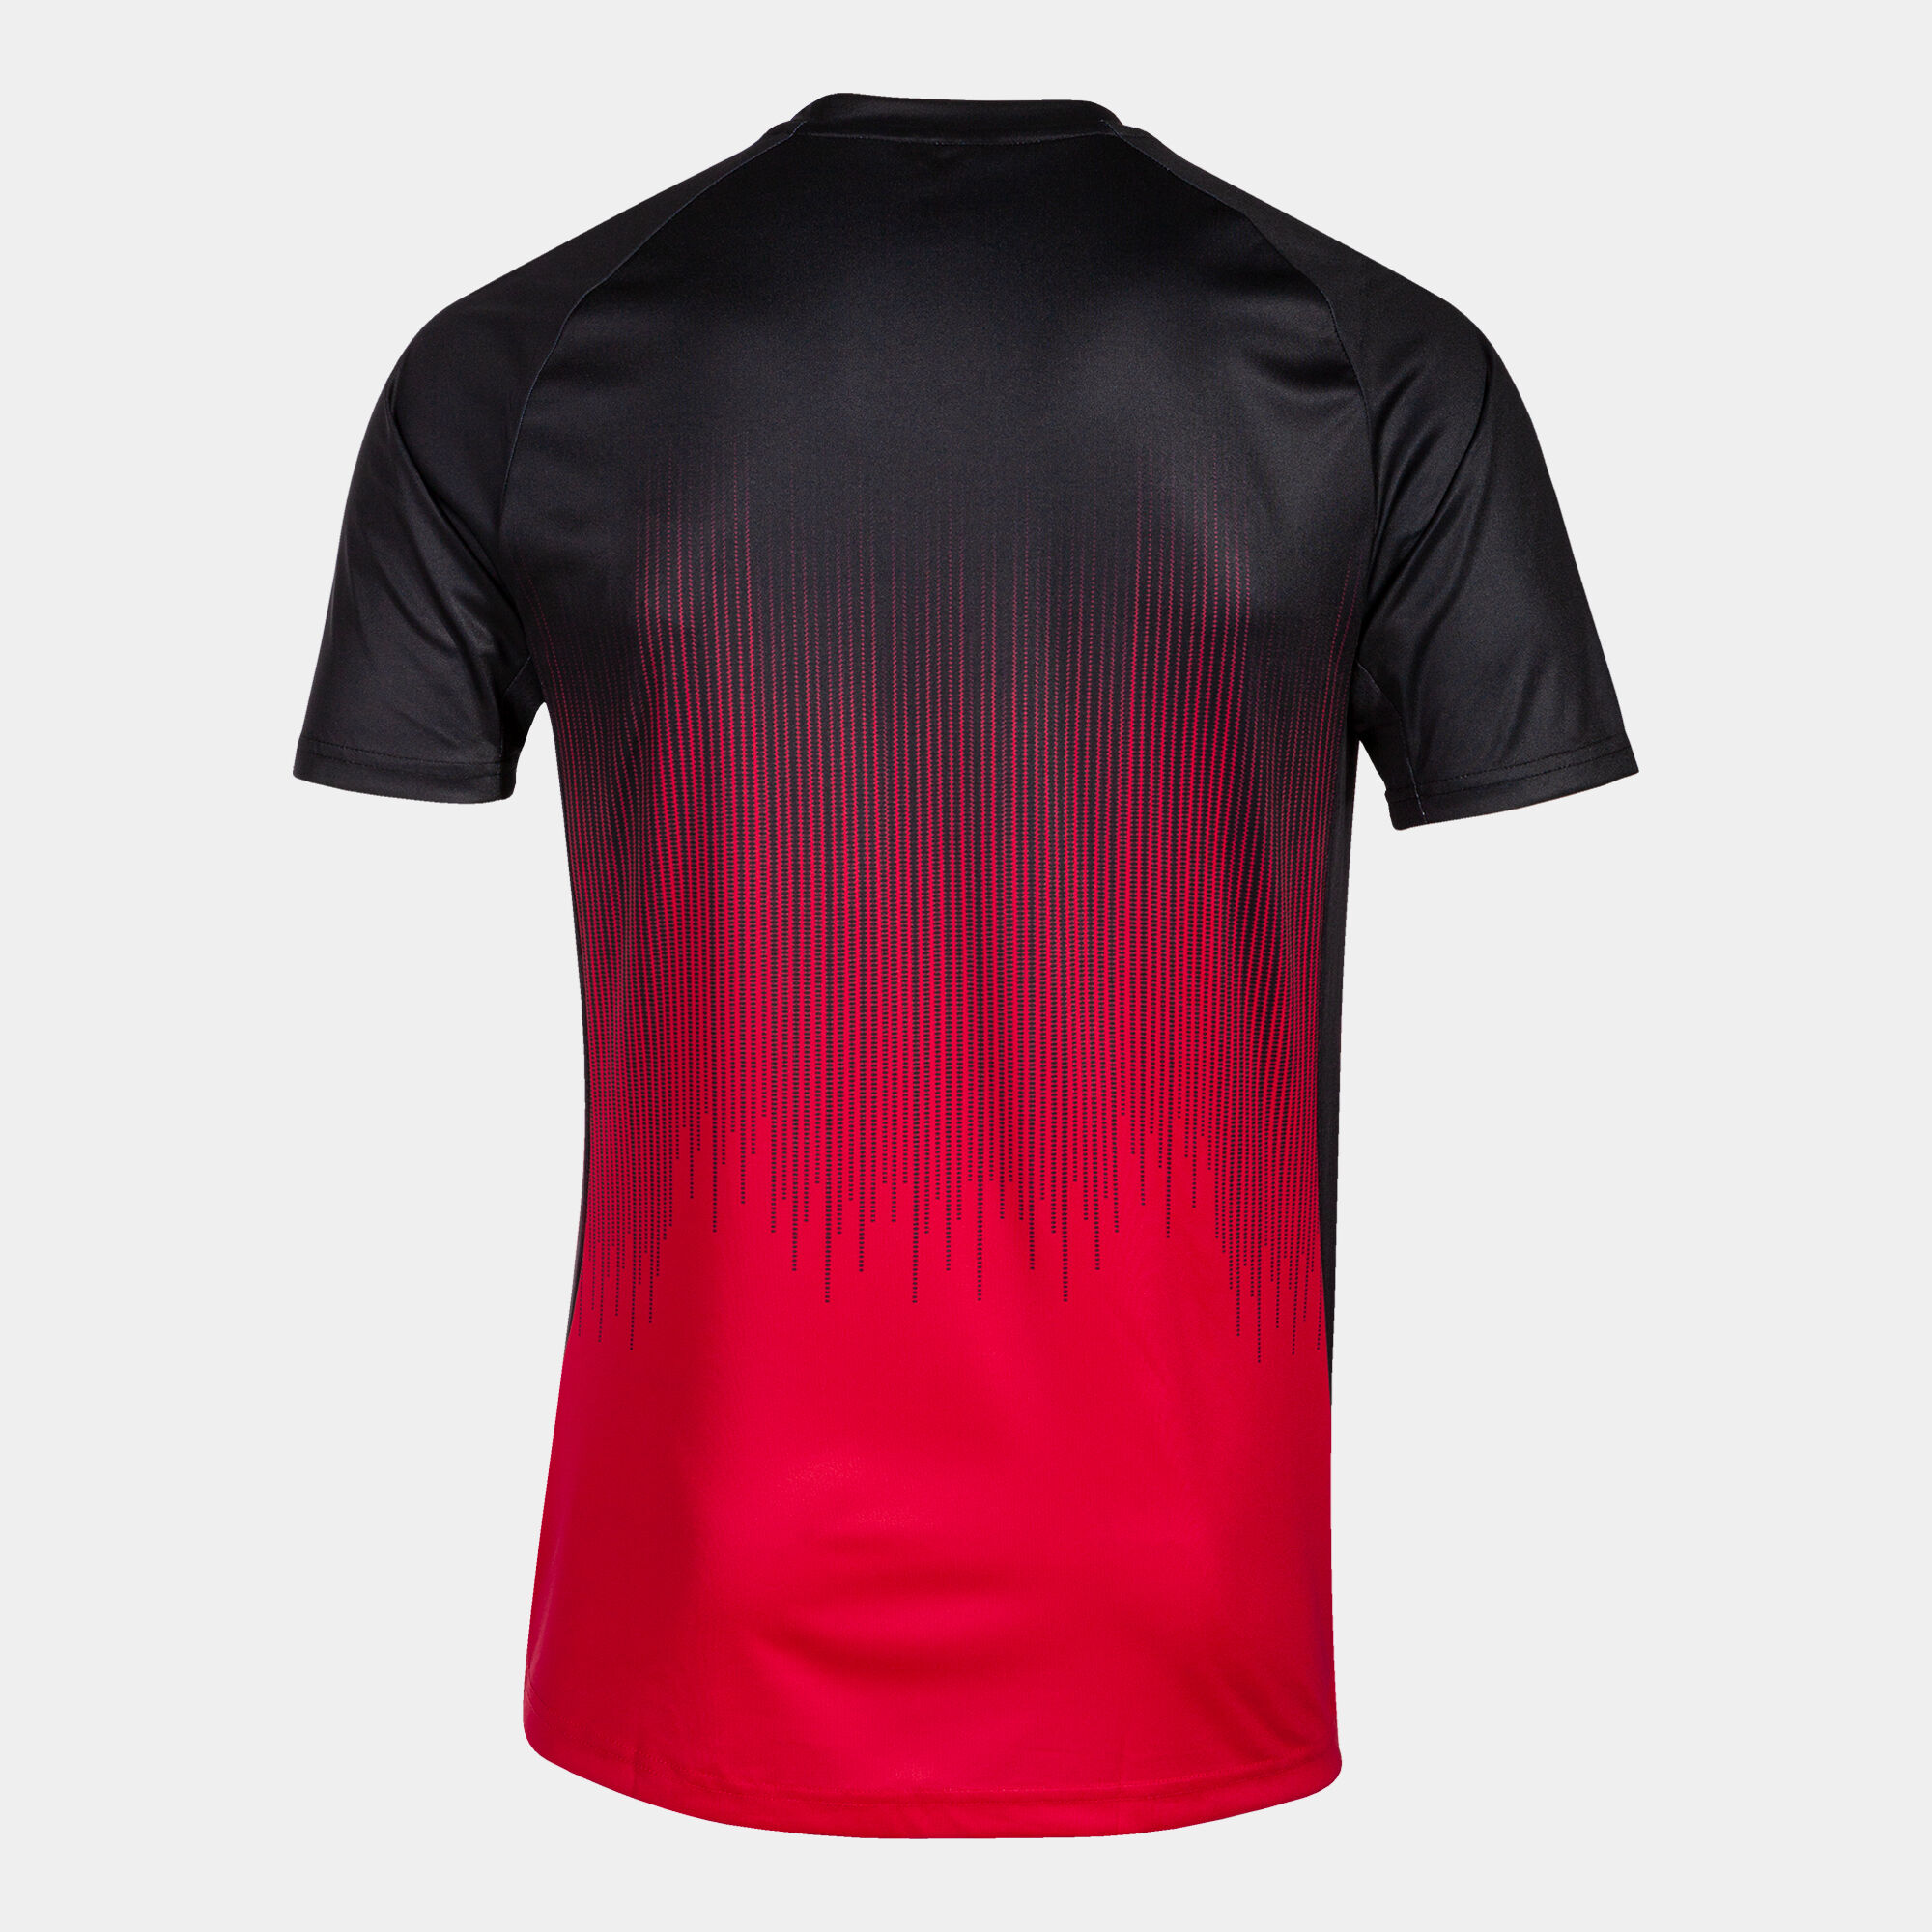 Camiseta entreno España Rugby negra-roja